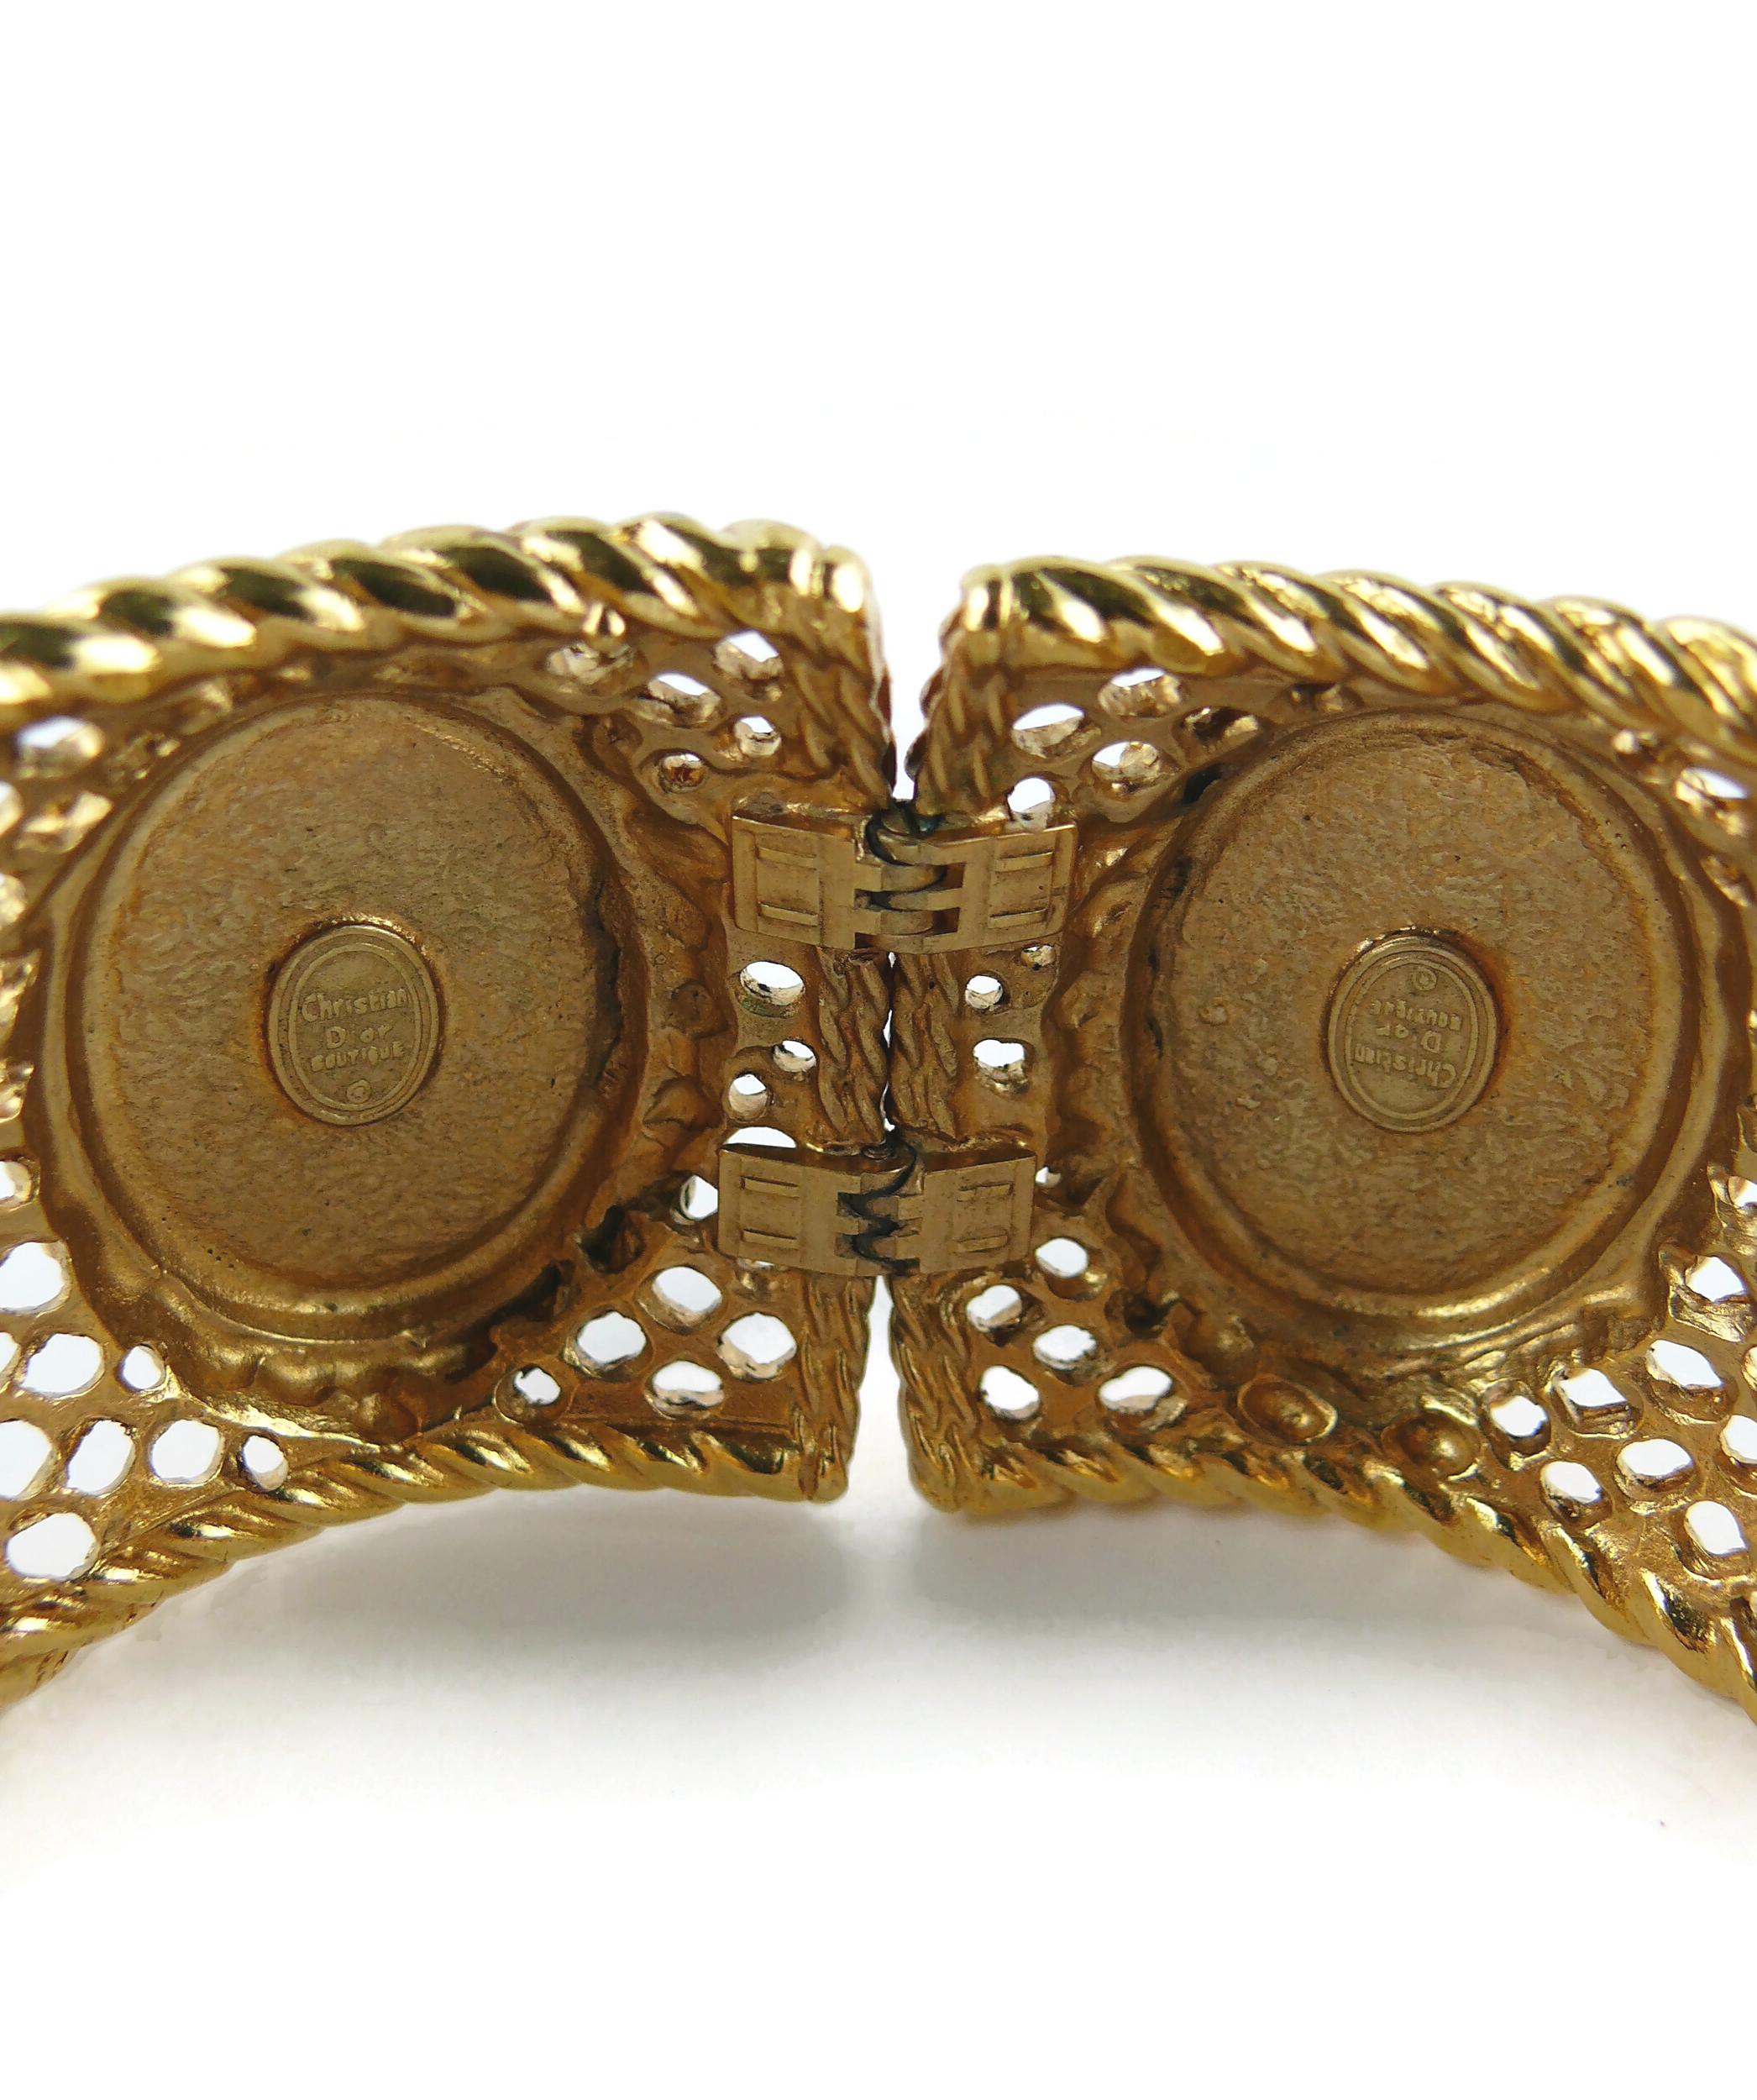 Christian Dior Boutique Massive Jewelled Gold Toned Latticework Cuff Bracelet For Sale 10